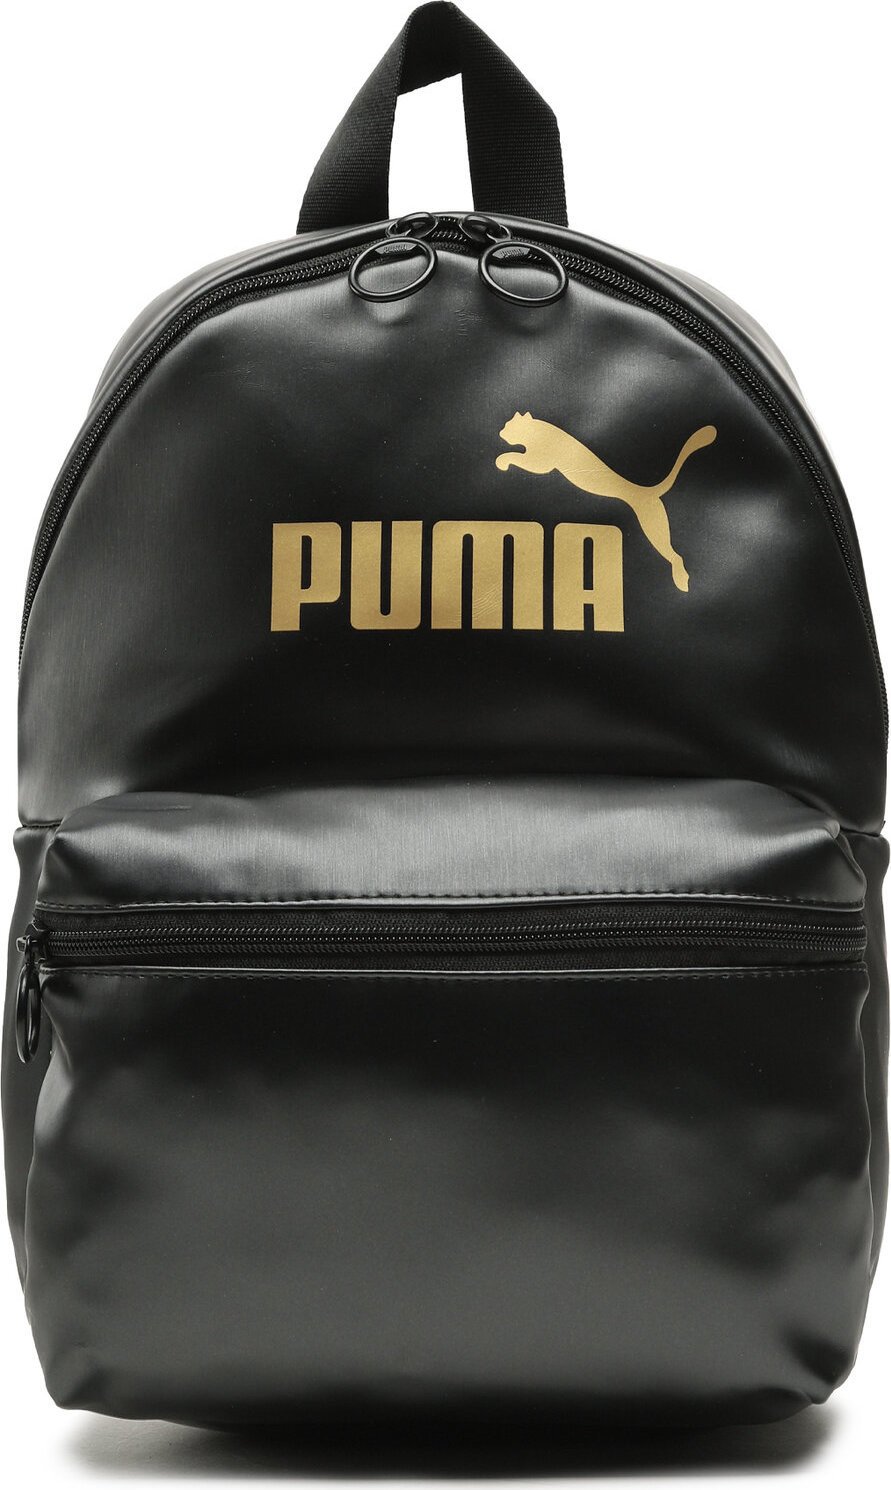 Batoh Puma Core Up Backpack 079476 01 Puma Black